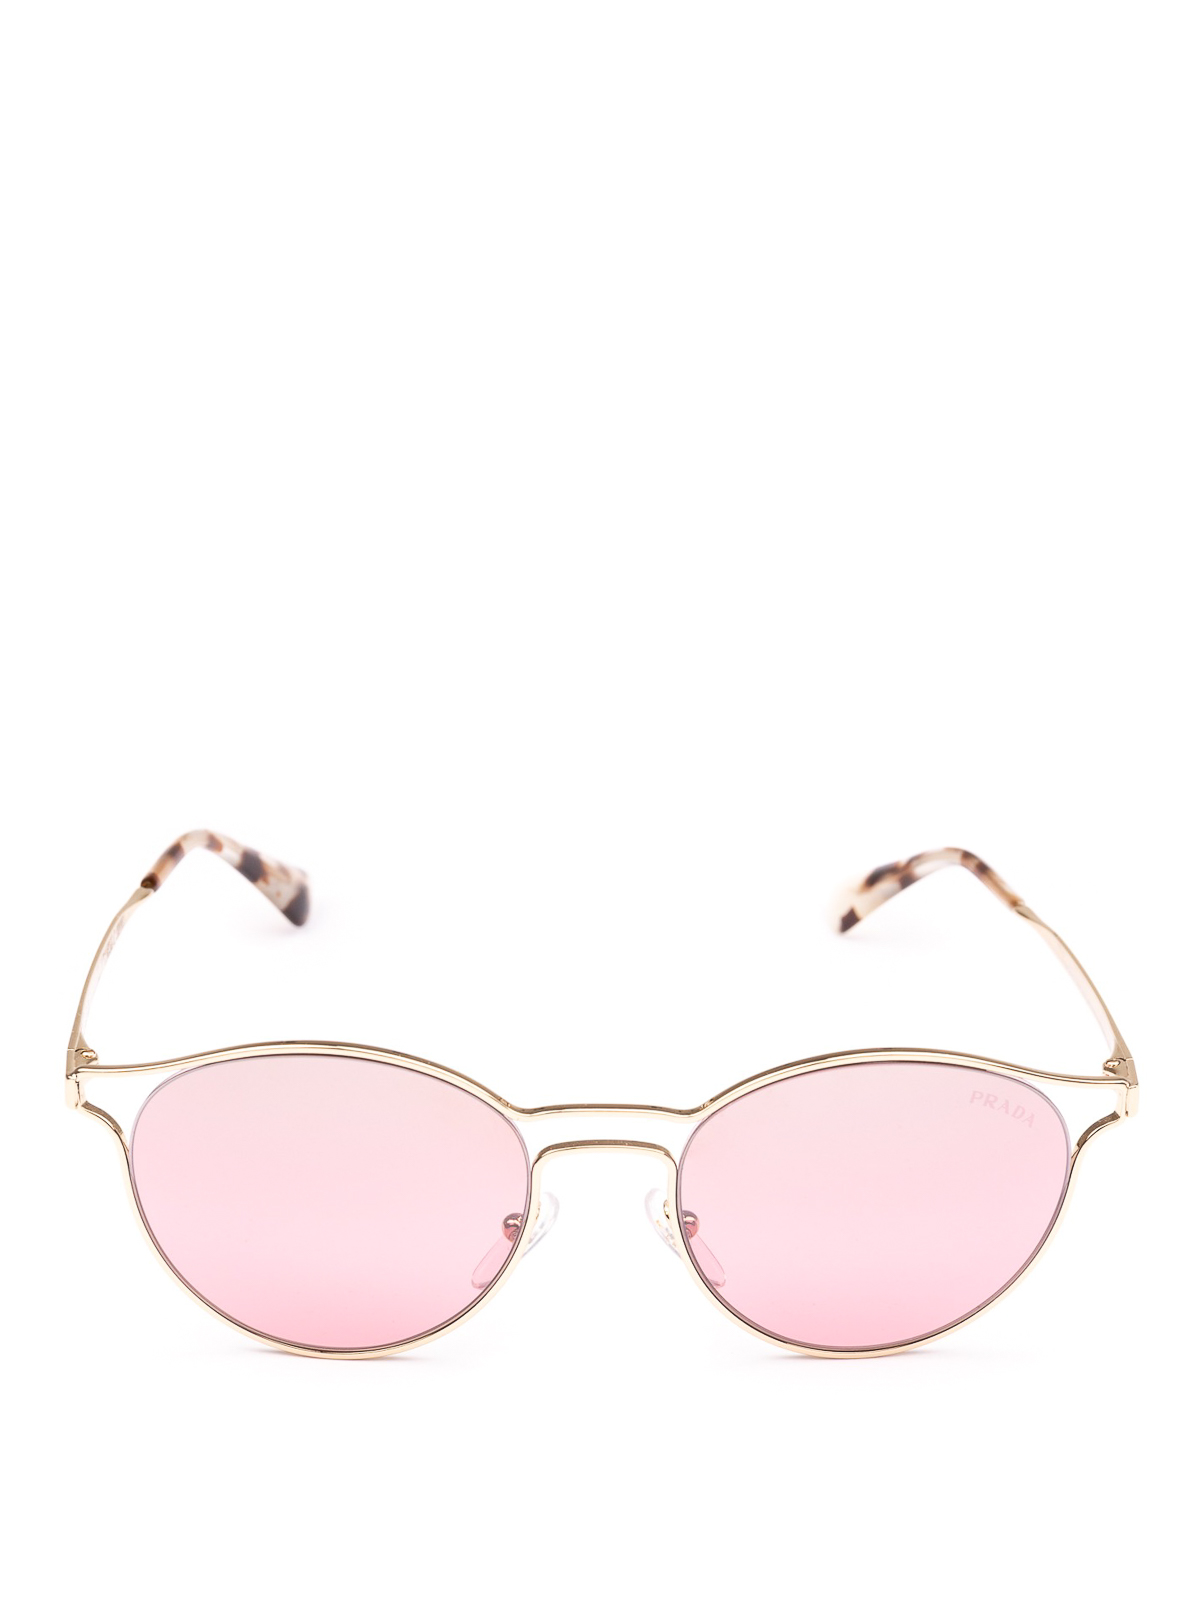 prada sunglasses pink frame